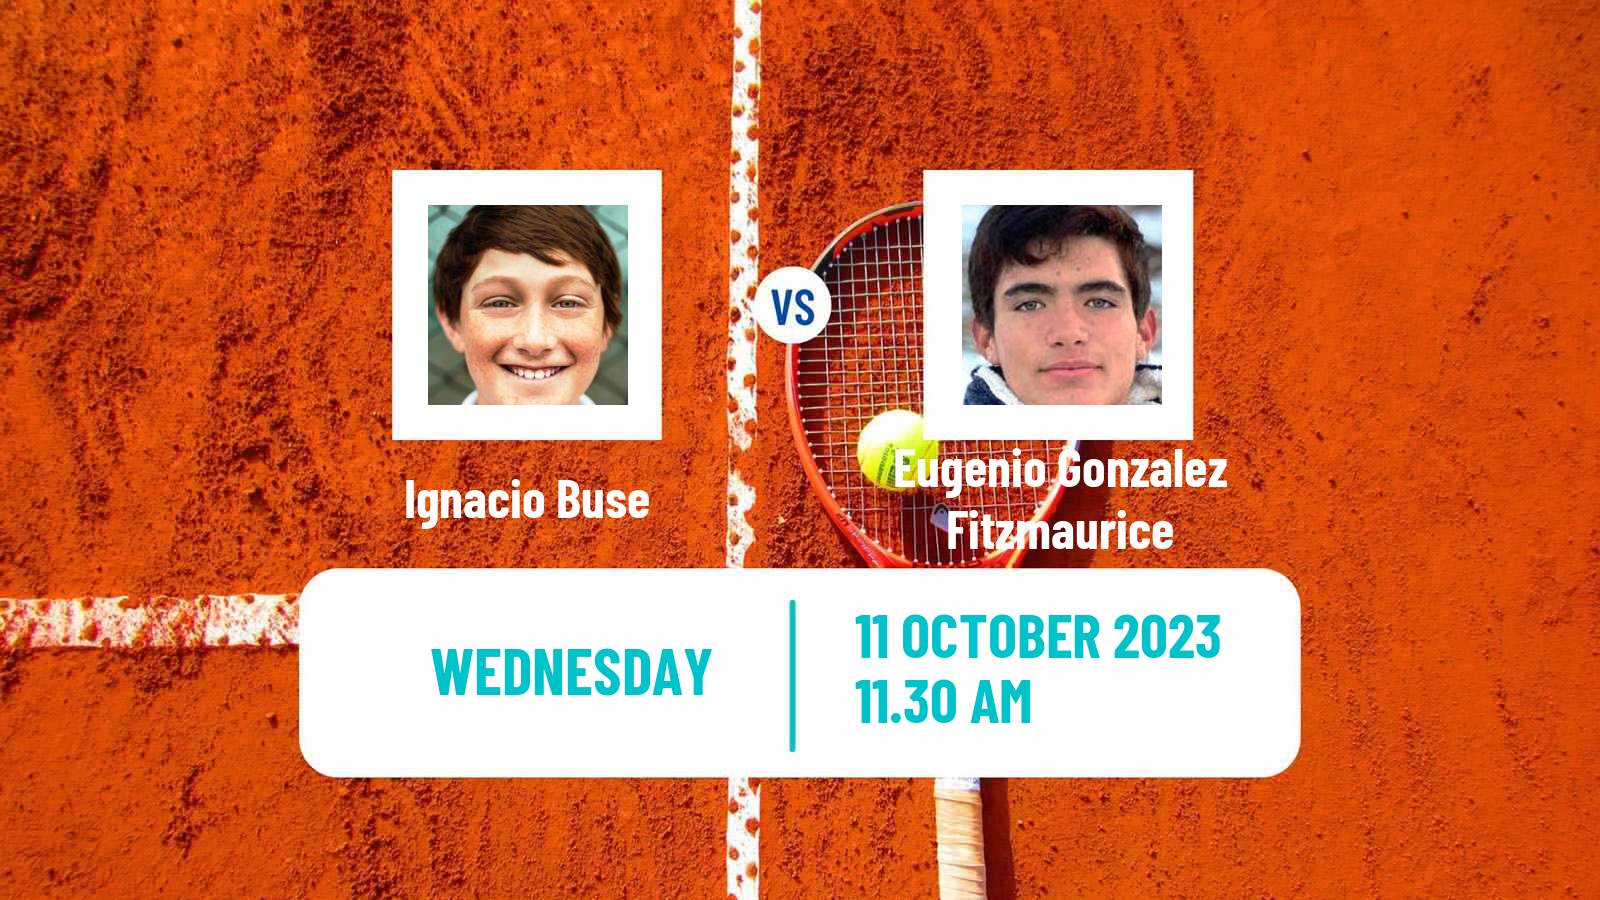 Tennis ITF M25 Zapopan Men Ignacio Buse - Eugenio Gonzalez Fitzmaurice